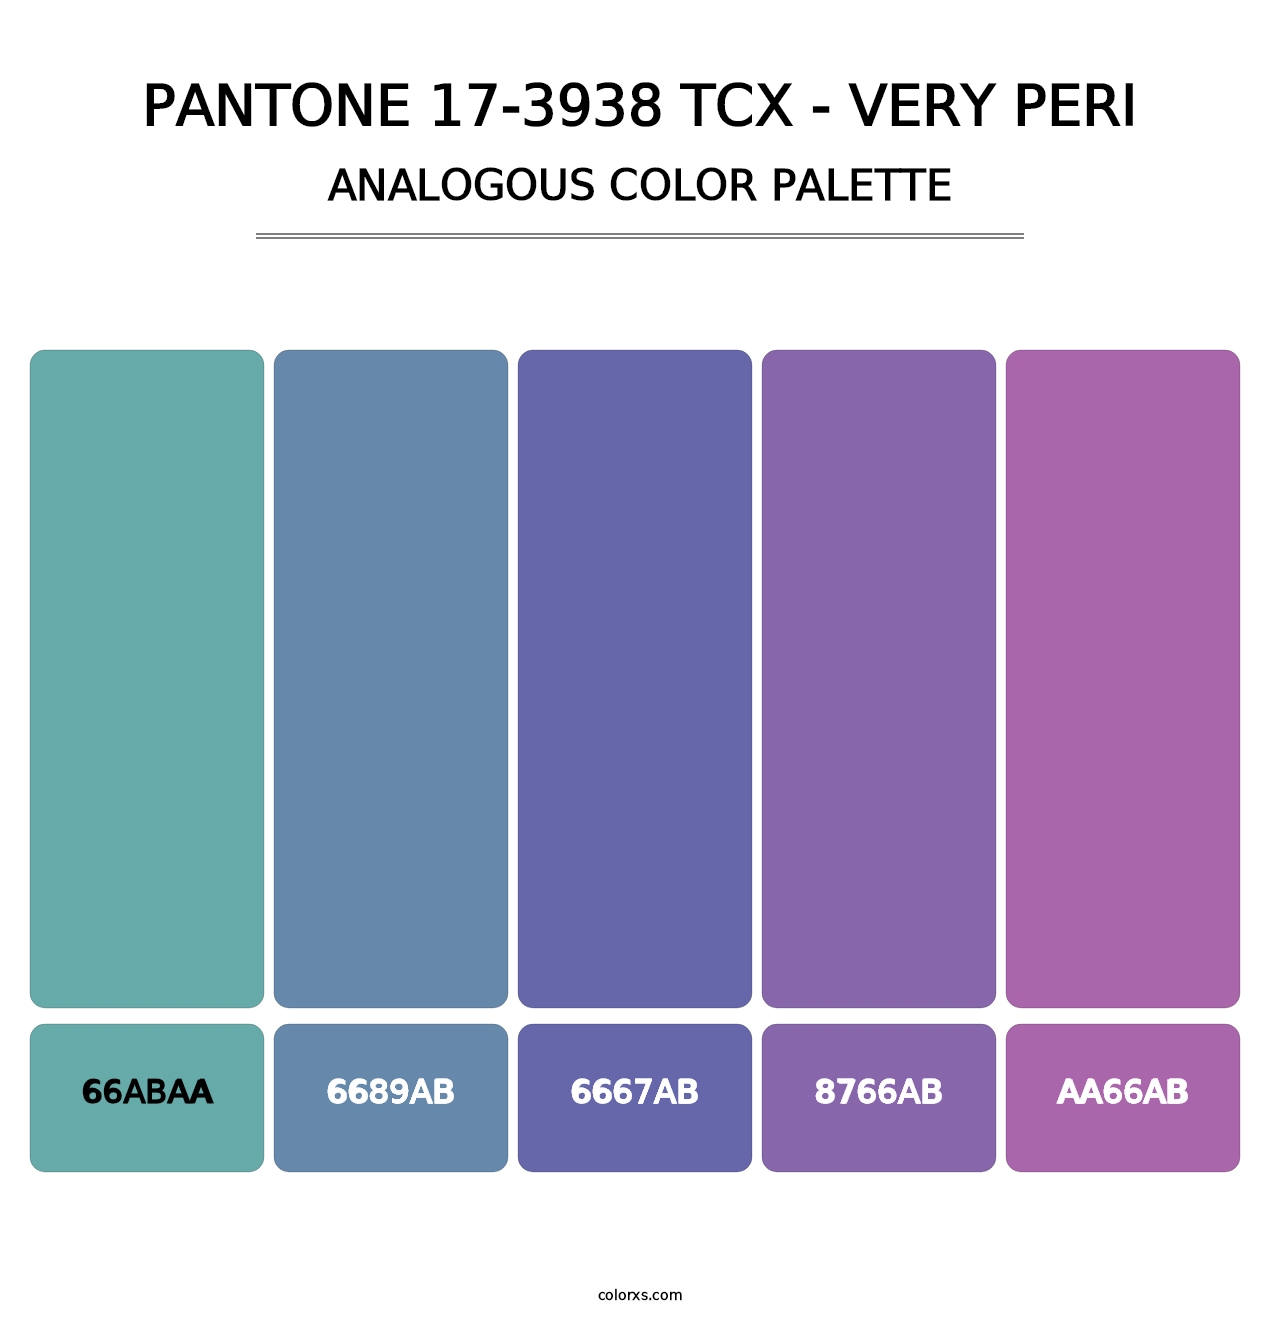 PANTONE 17-3938 TCX - Very Peri - Analogous Color Palette